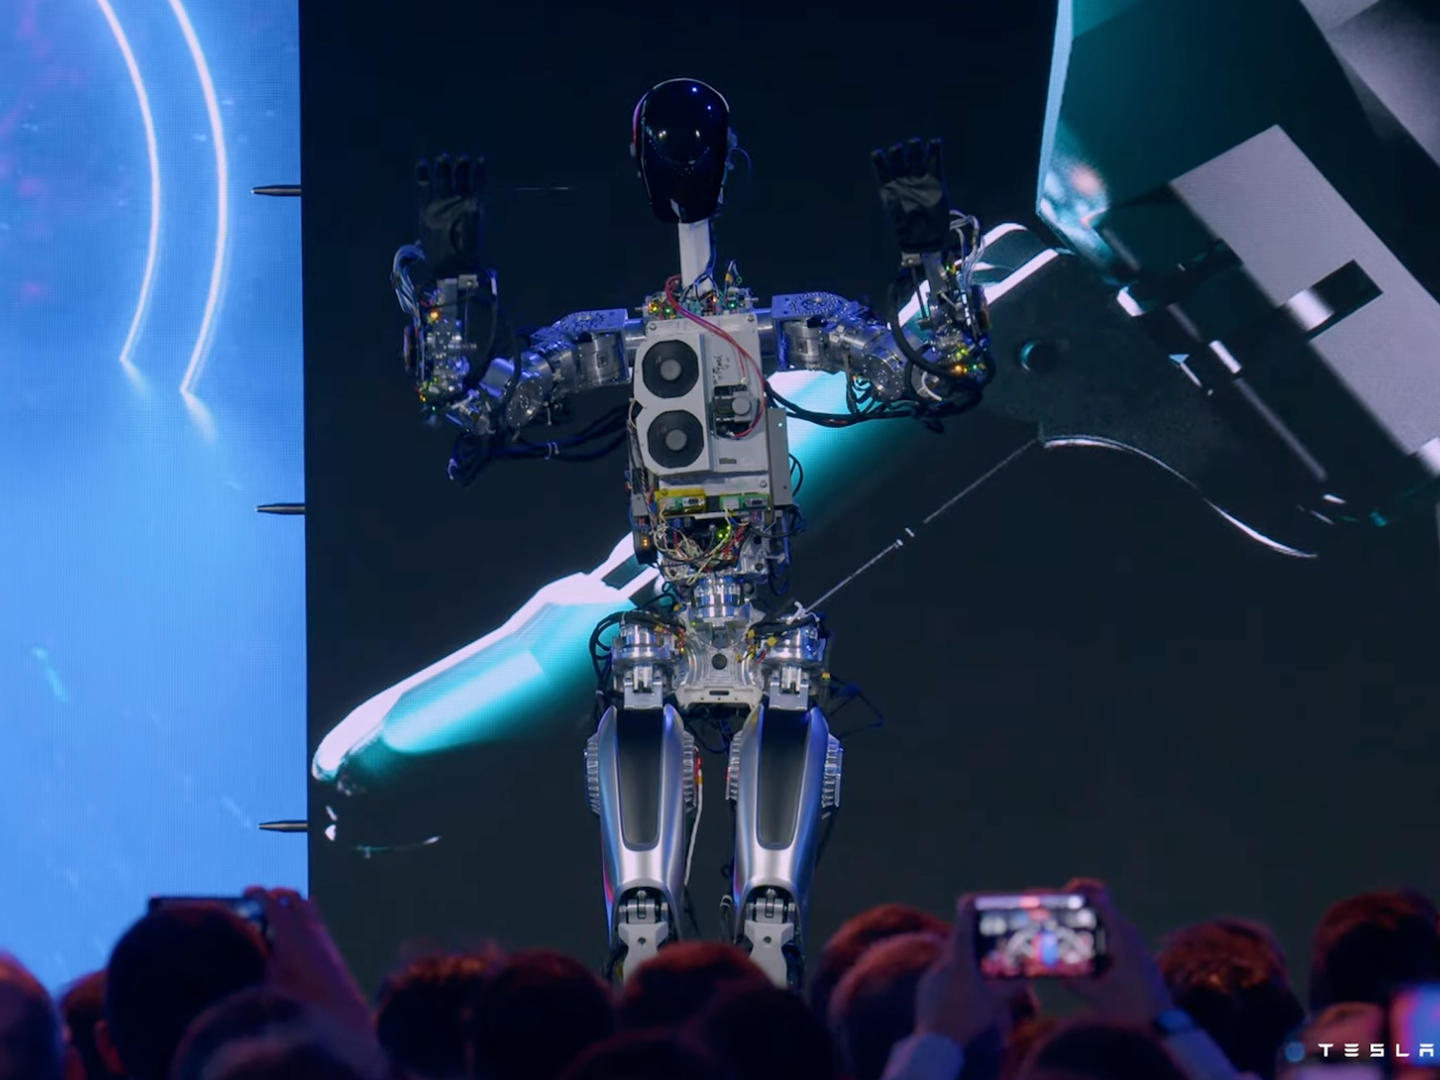 Tesla Optimus robot prototype dancing on stage